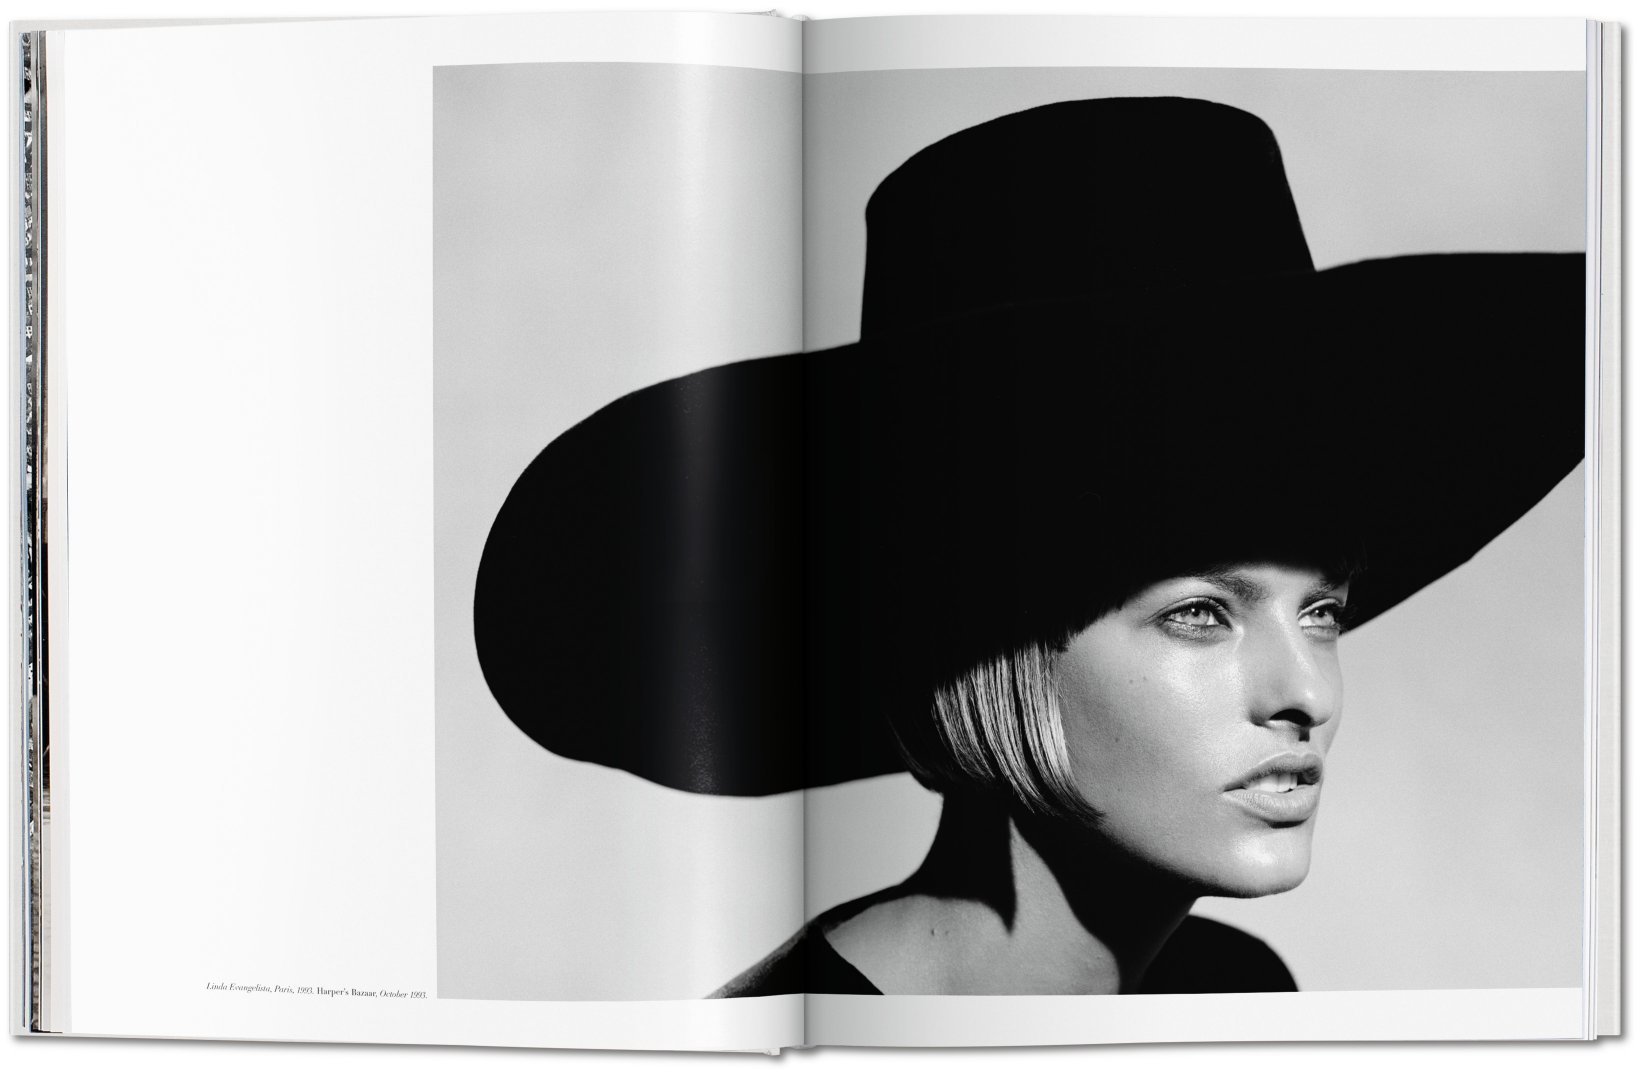 Dior lanza un libro en honor a Peter Lindbergh con fotografías inéditas